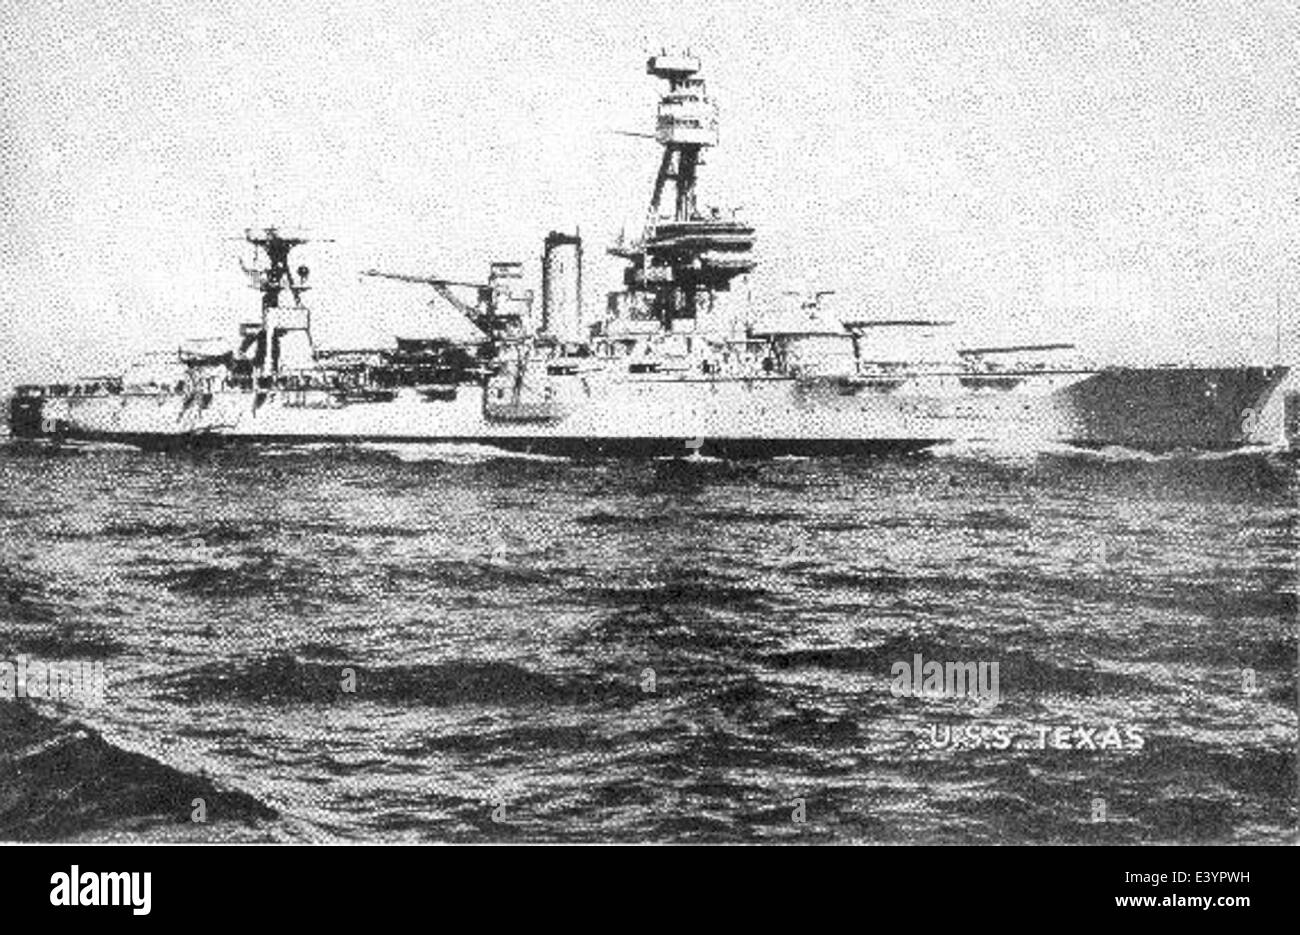 Battleship texas Black and White Stock Photos & Images - Alamy